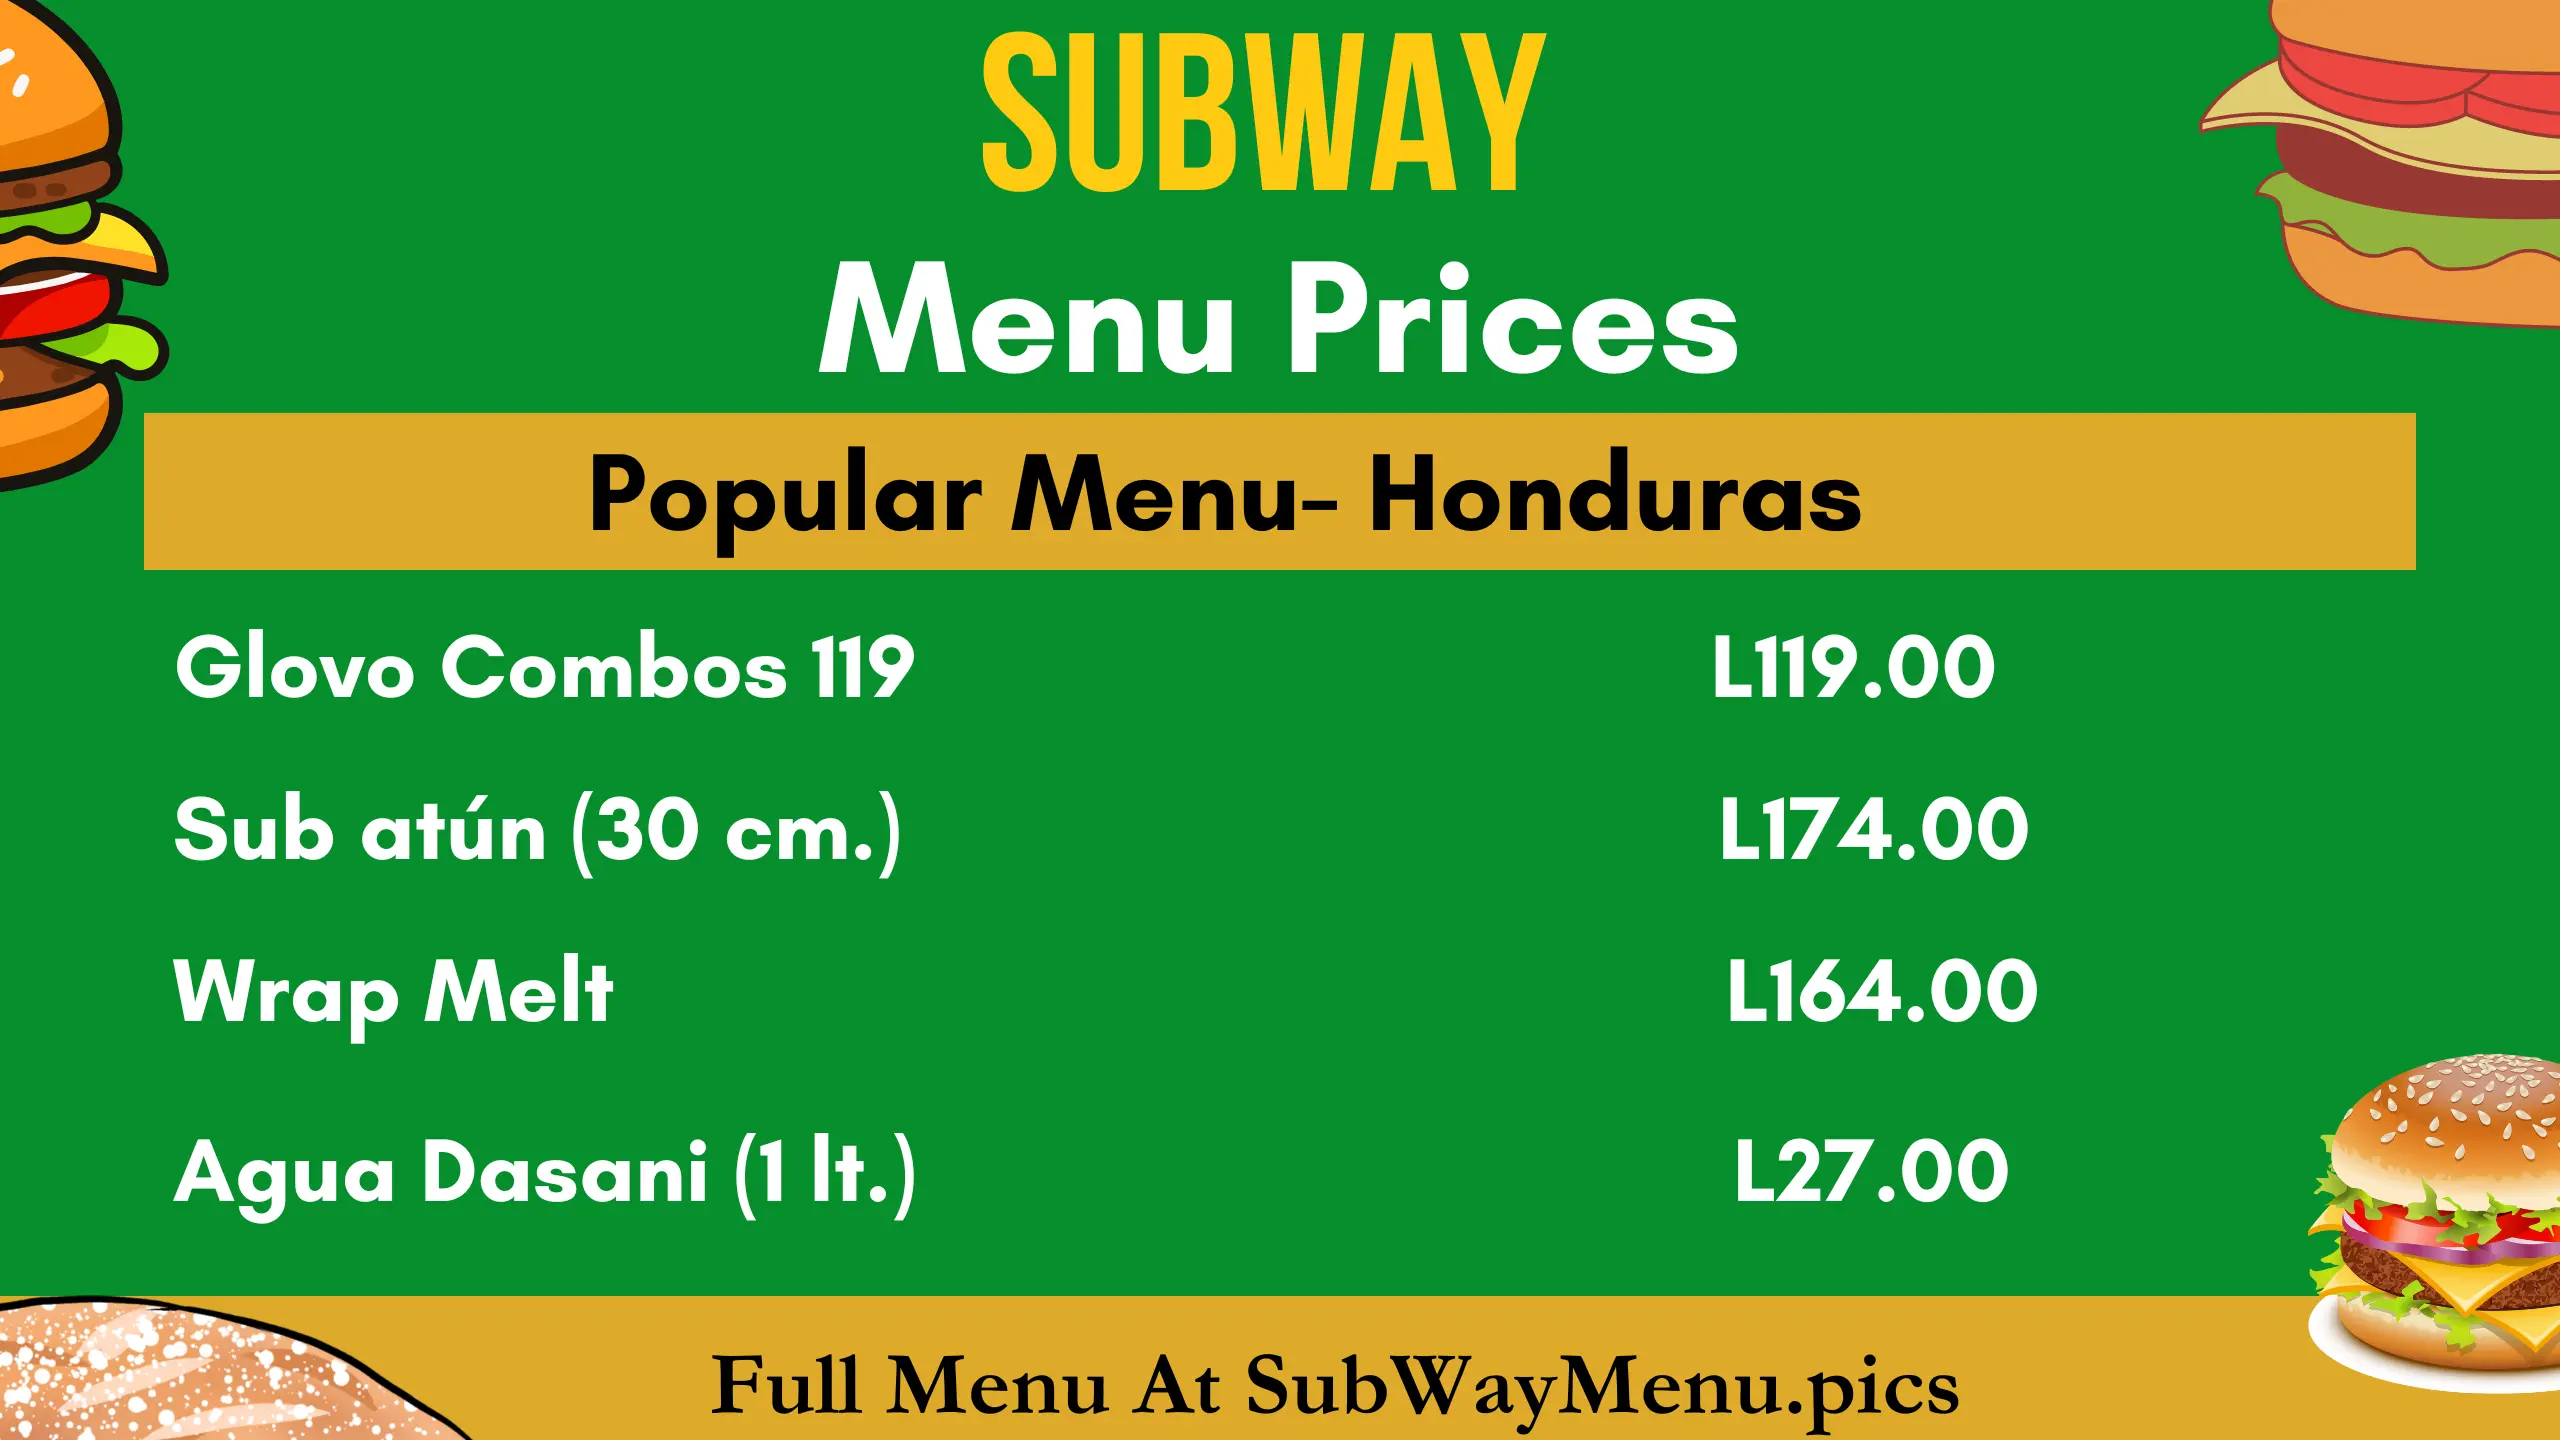 Subway Menu Prices (Honduras)